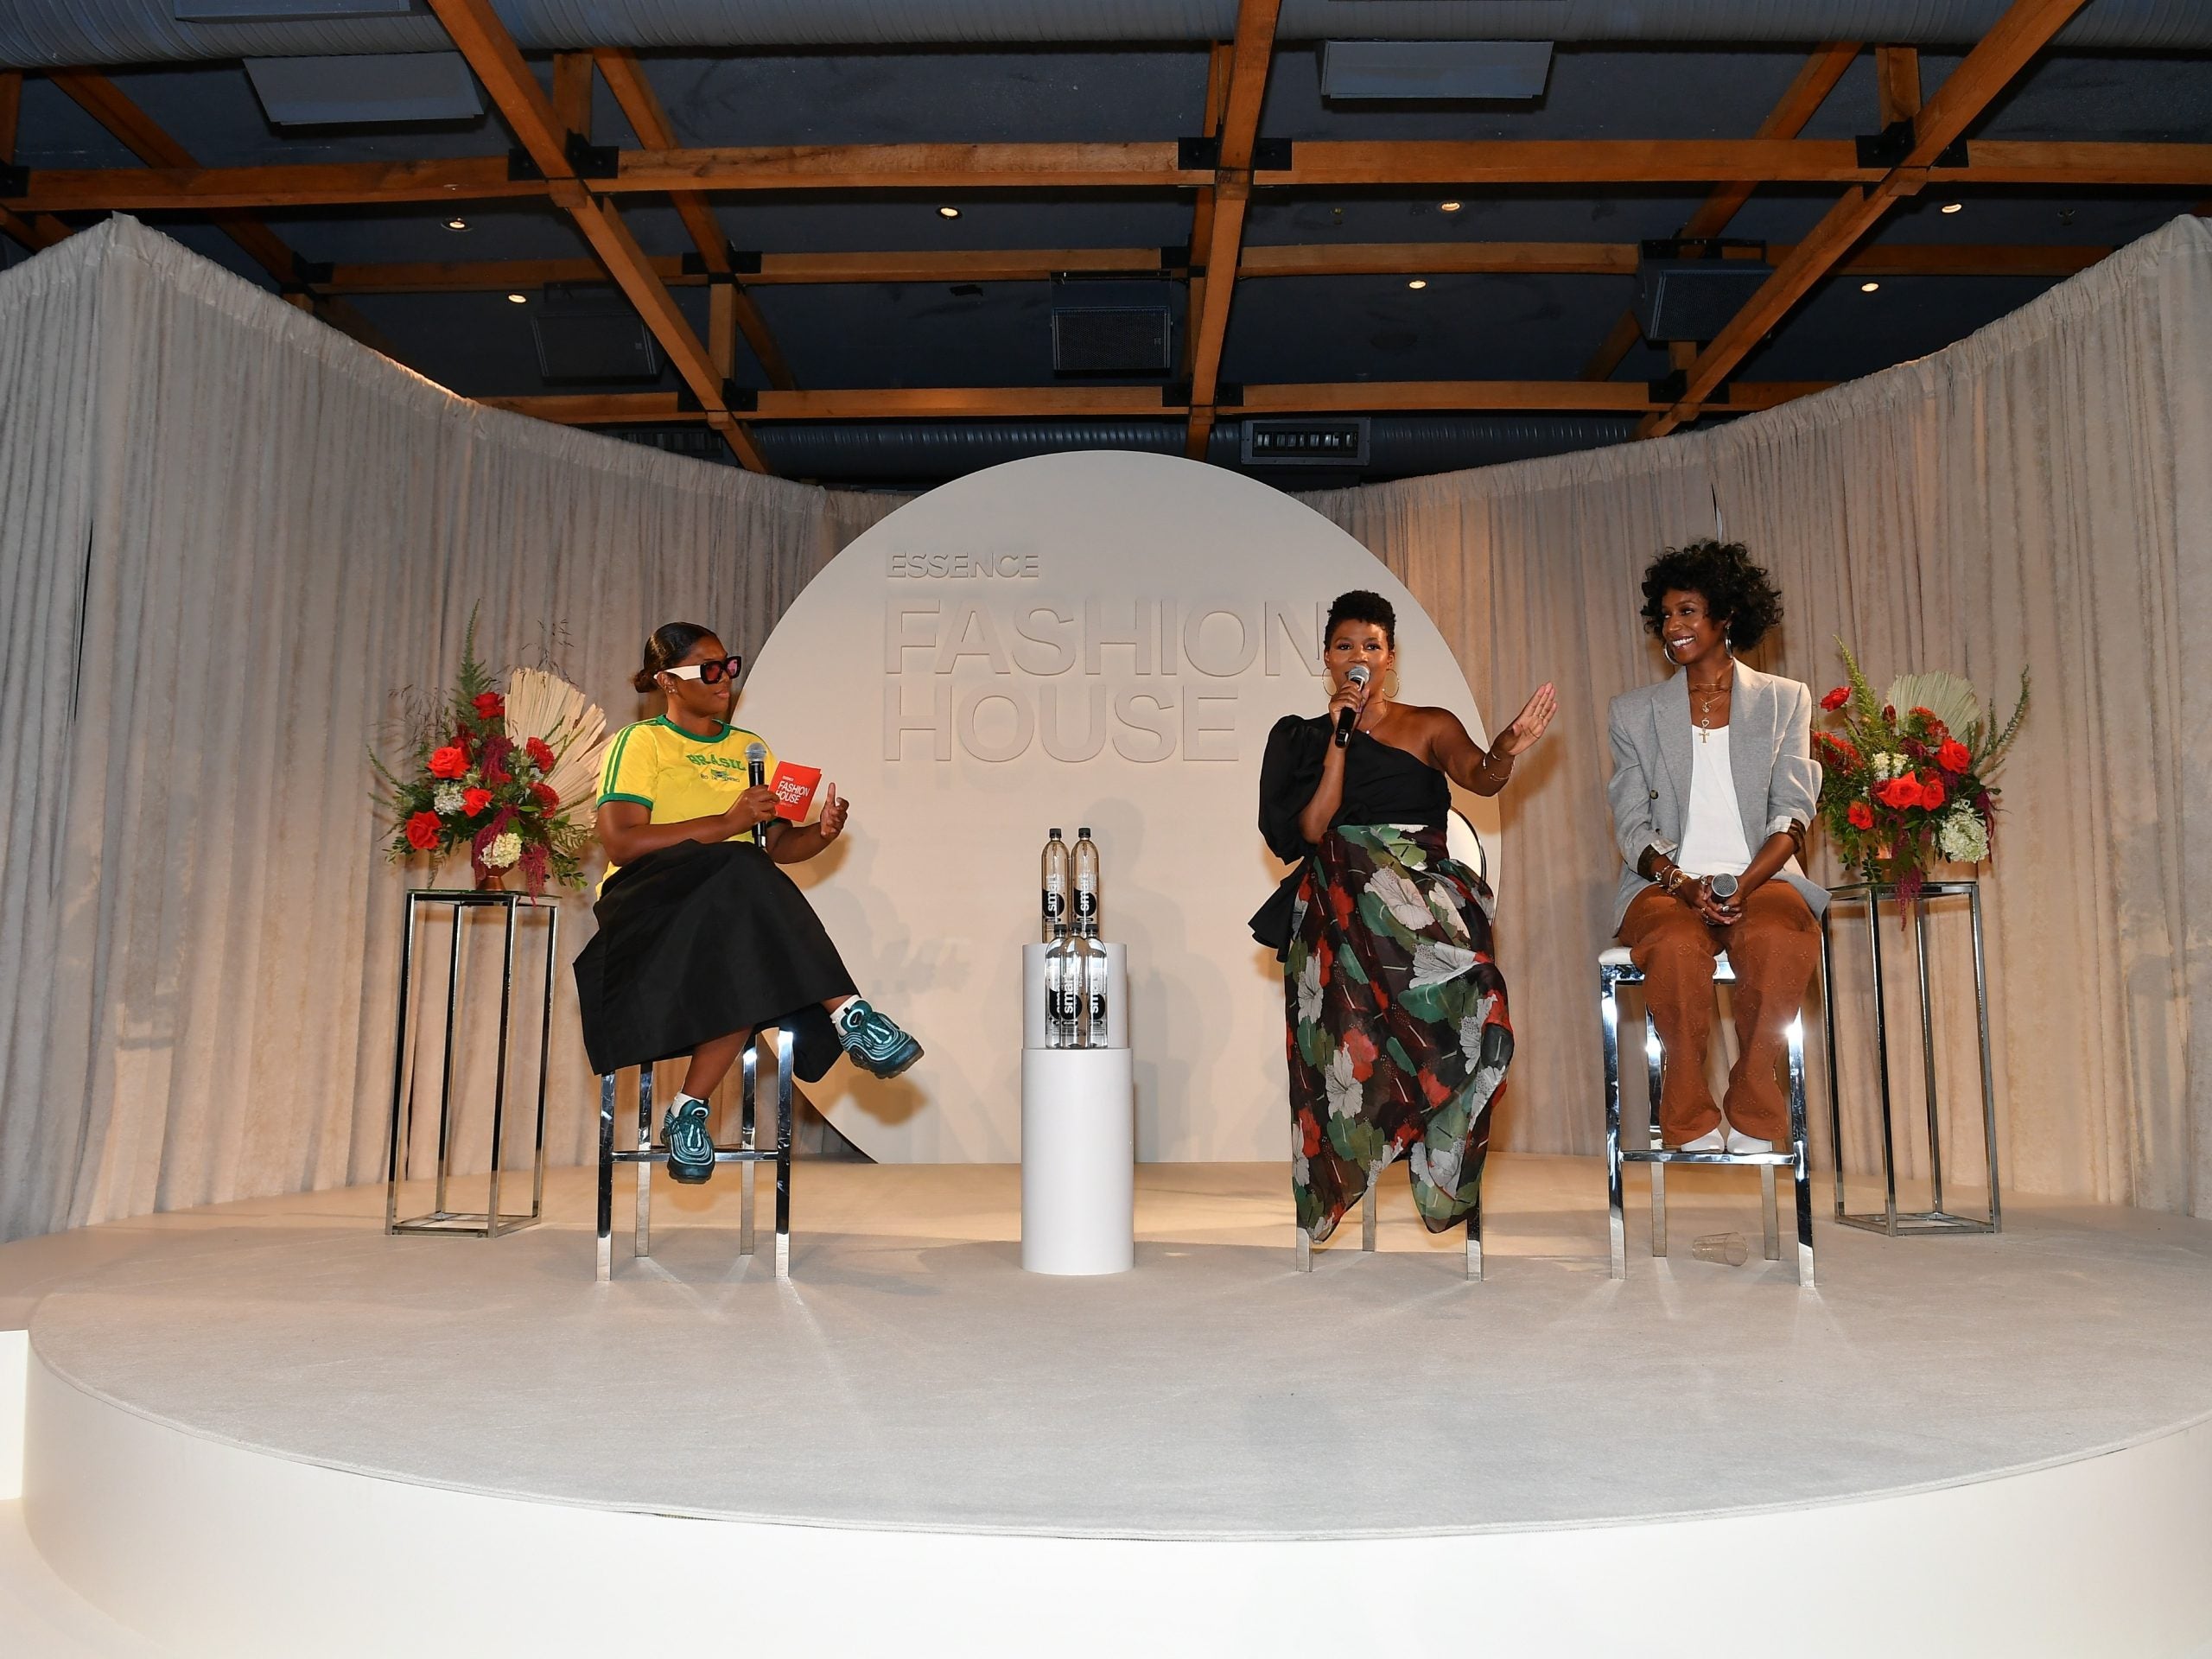 ESSENCE Fashion House: Jamillah Davis Hernandez and Devan Wallace On Mental Health In Black Fashion